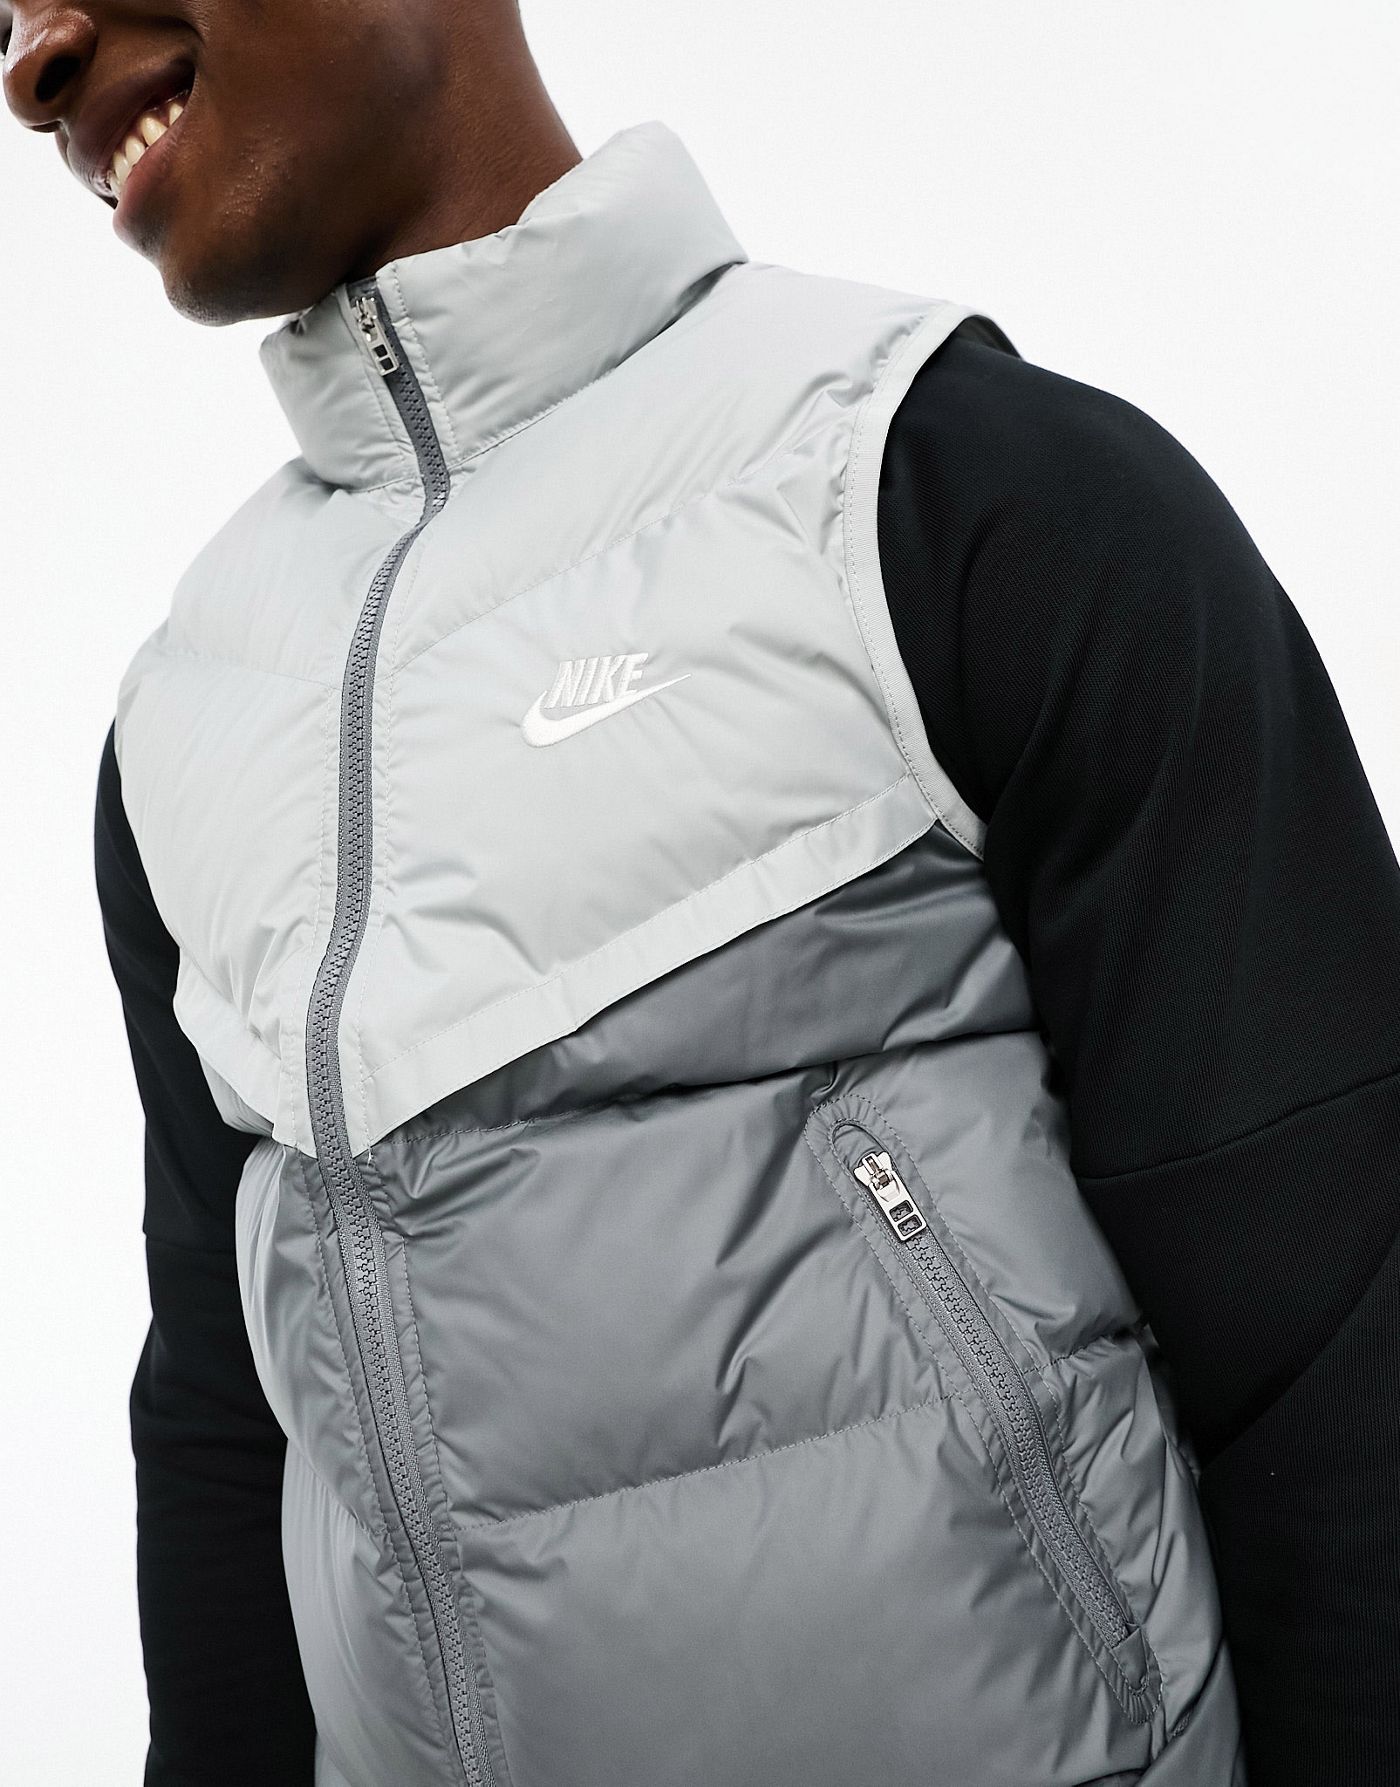 Nike Windrunner insulated gilet in grey